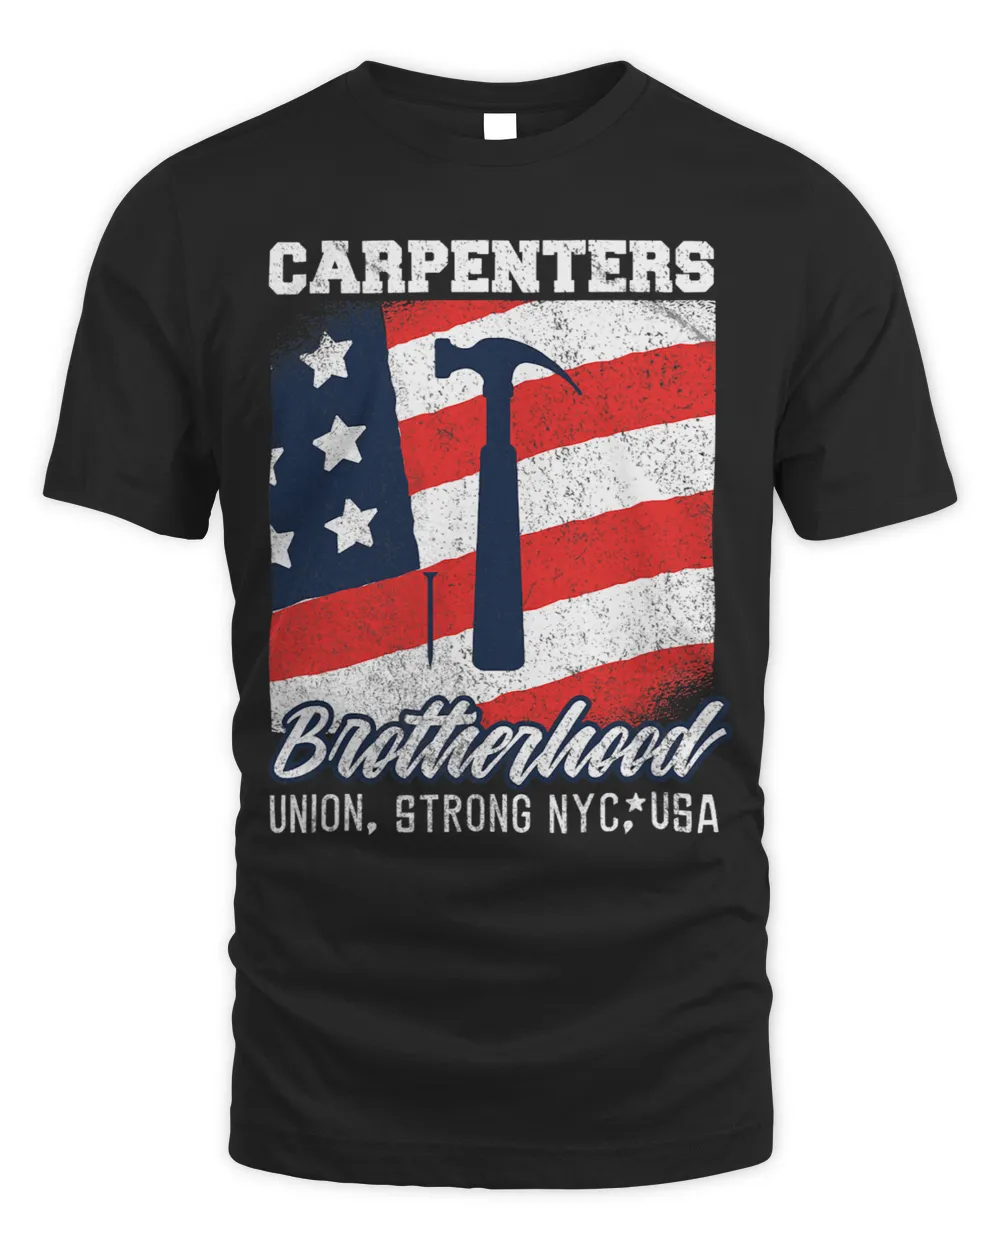 Carpenters Brotherhood Union Strong New York City